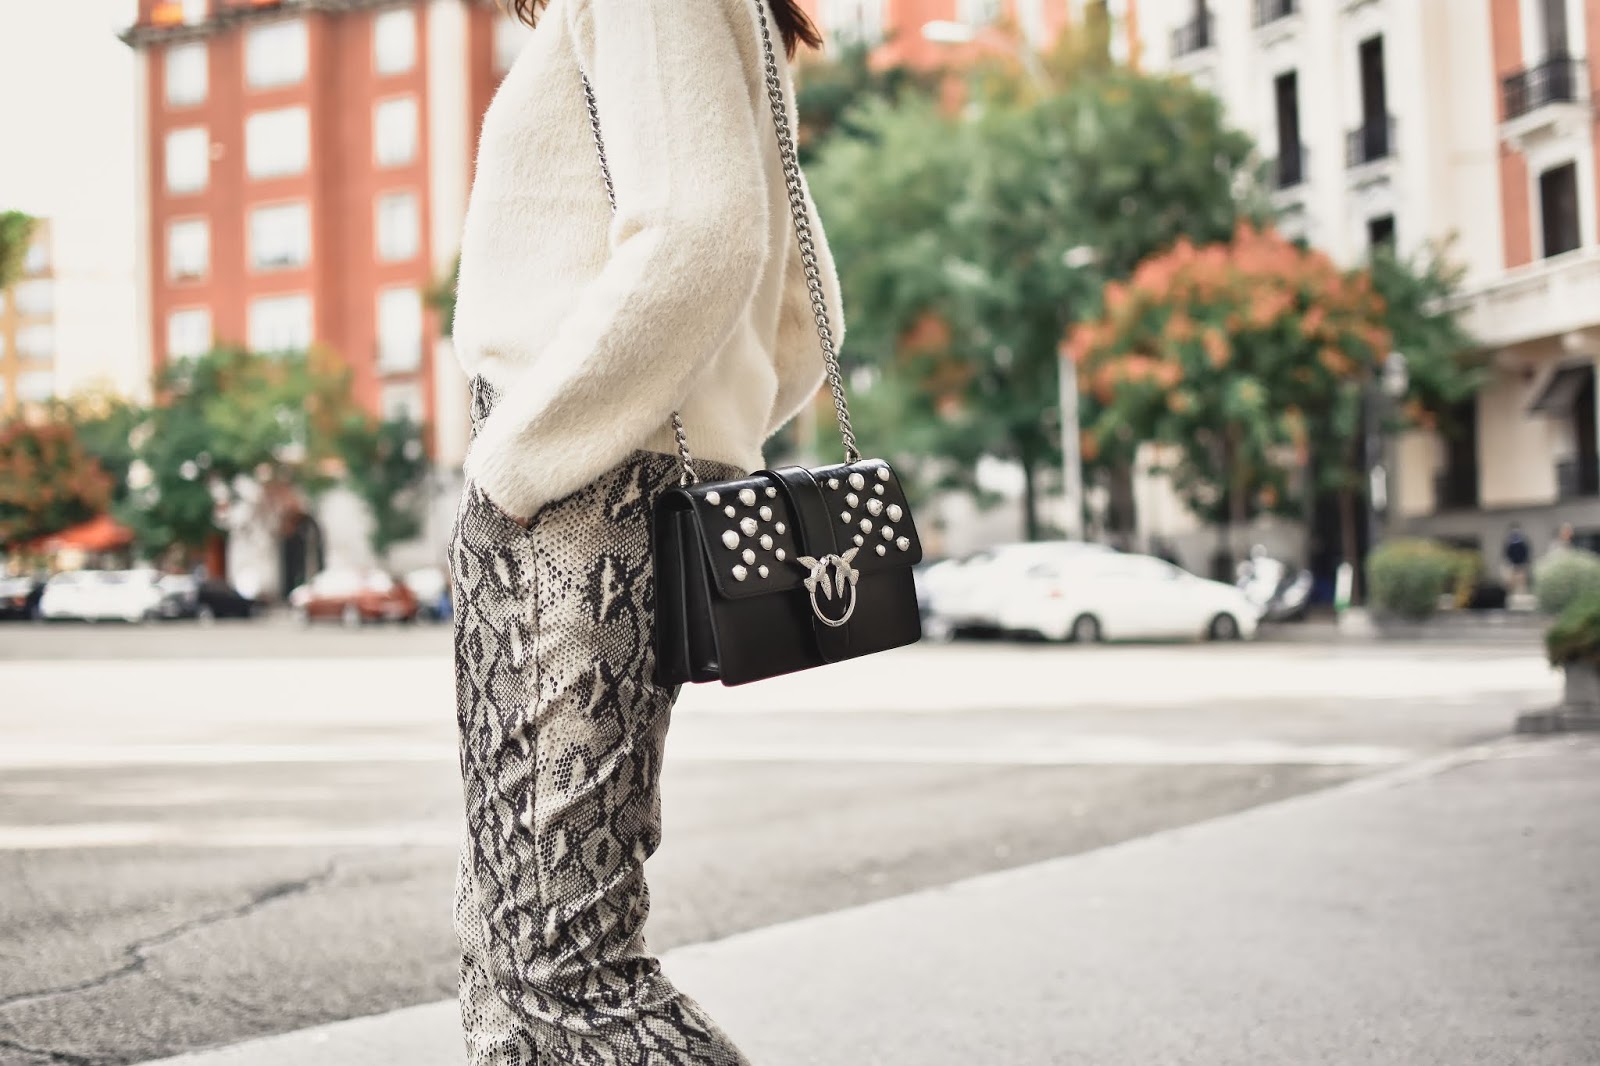 el-blog-de-silvia-rodriguez-street-style-madrid-total-look-loavies-pantalones-serpiente-blogger-influencer